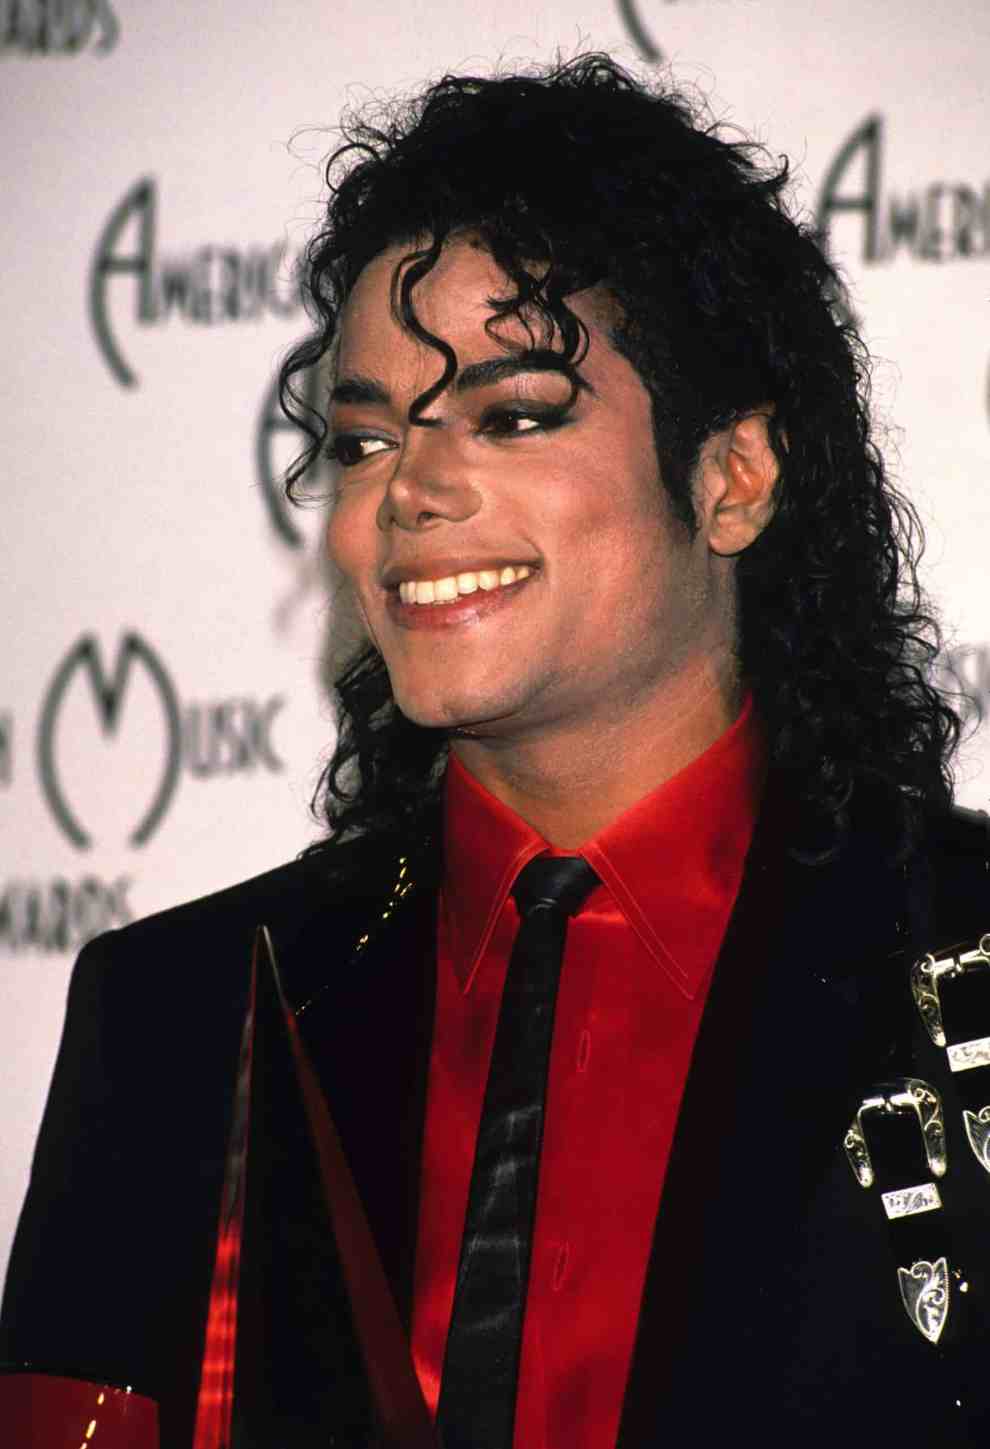 Michael Jackson at the AMAs